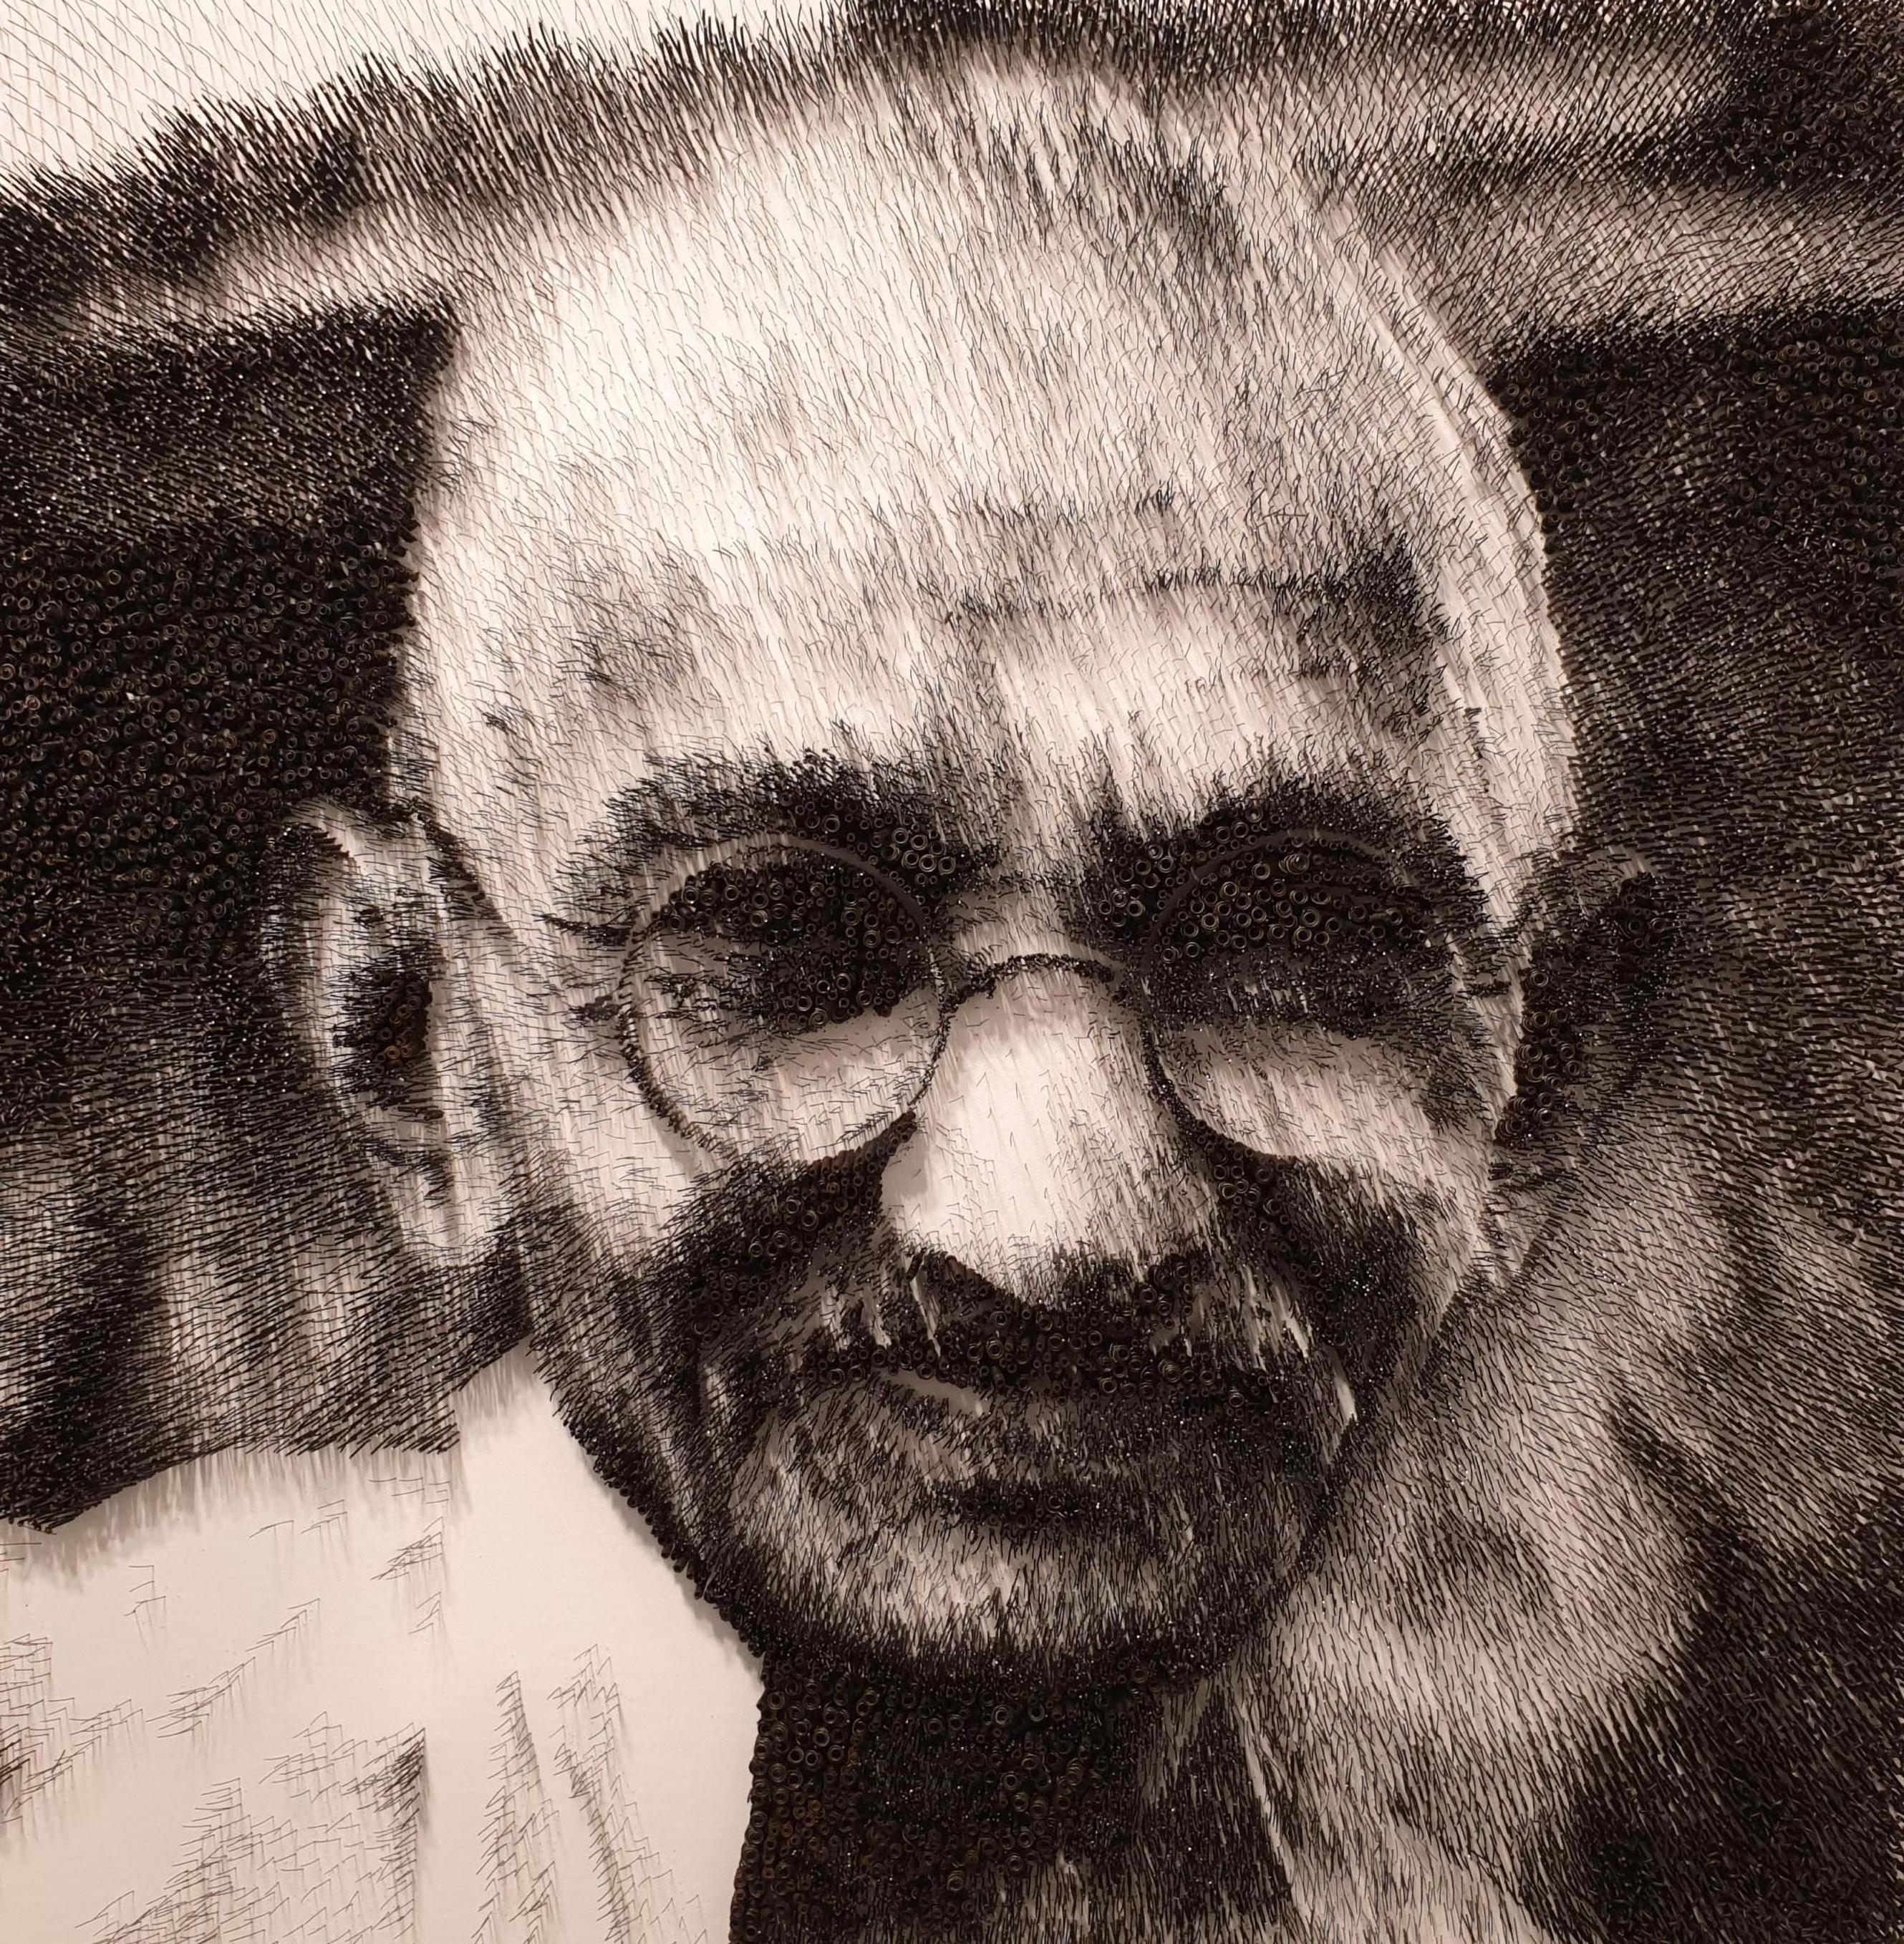 Mohandas Gandhi[Black&White, Steel on canvas, Stereoscopic, Portrait, New media] - Mixed Media Art by Kim Yong Jin